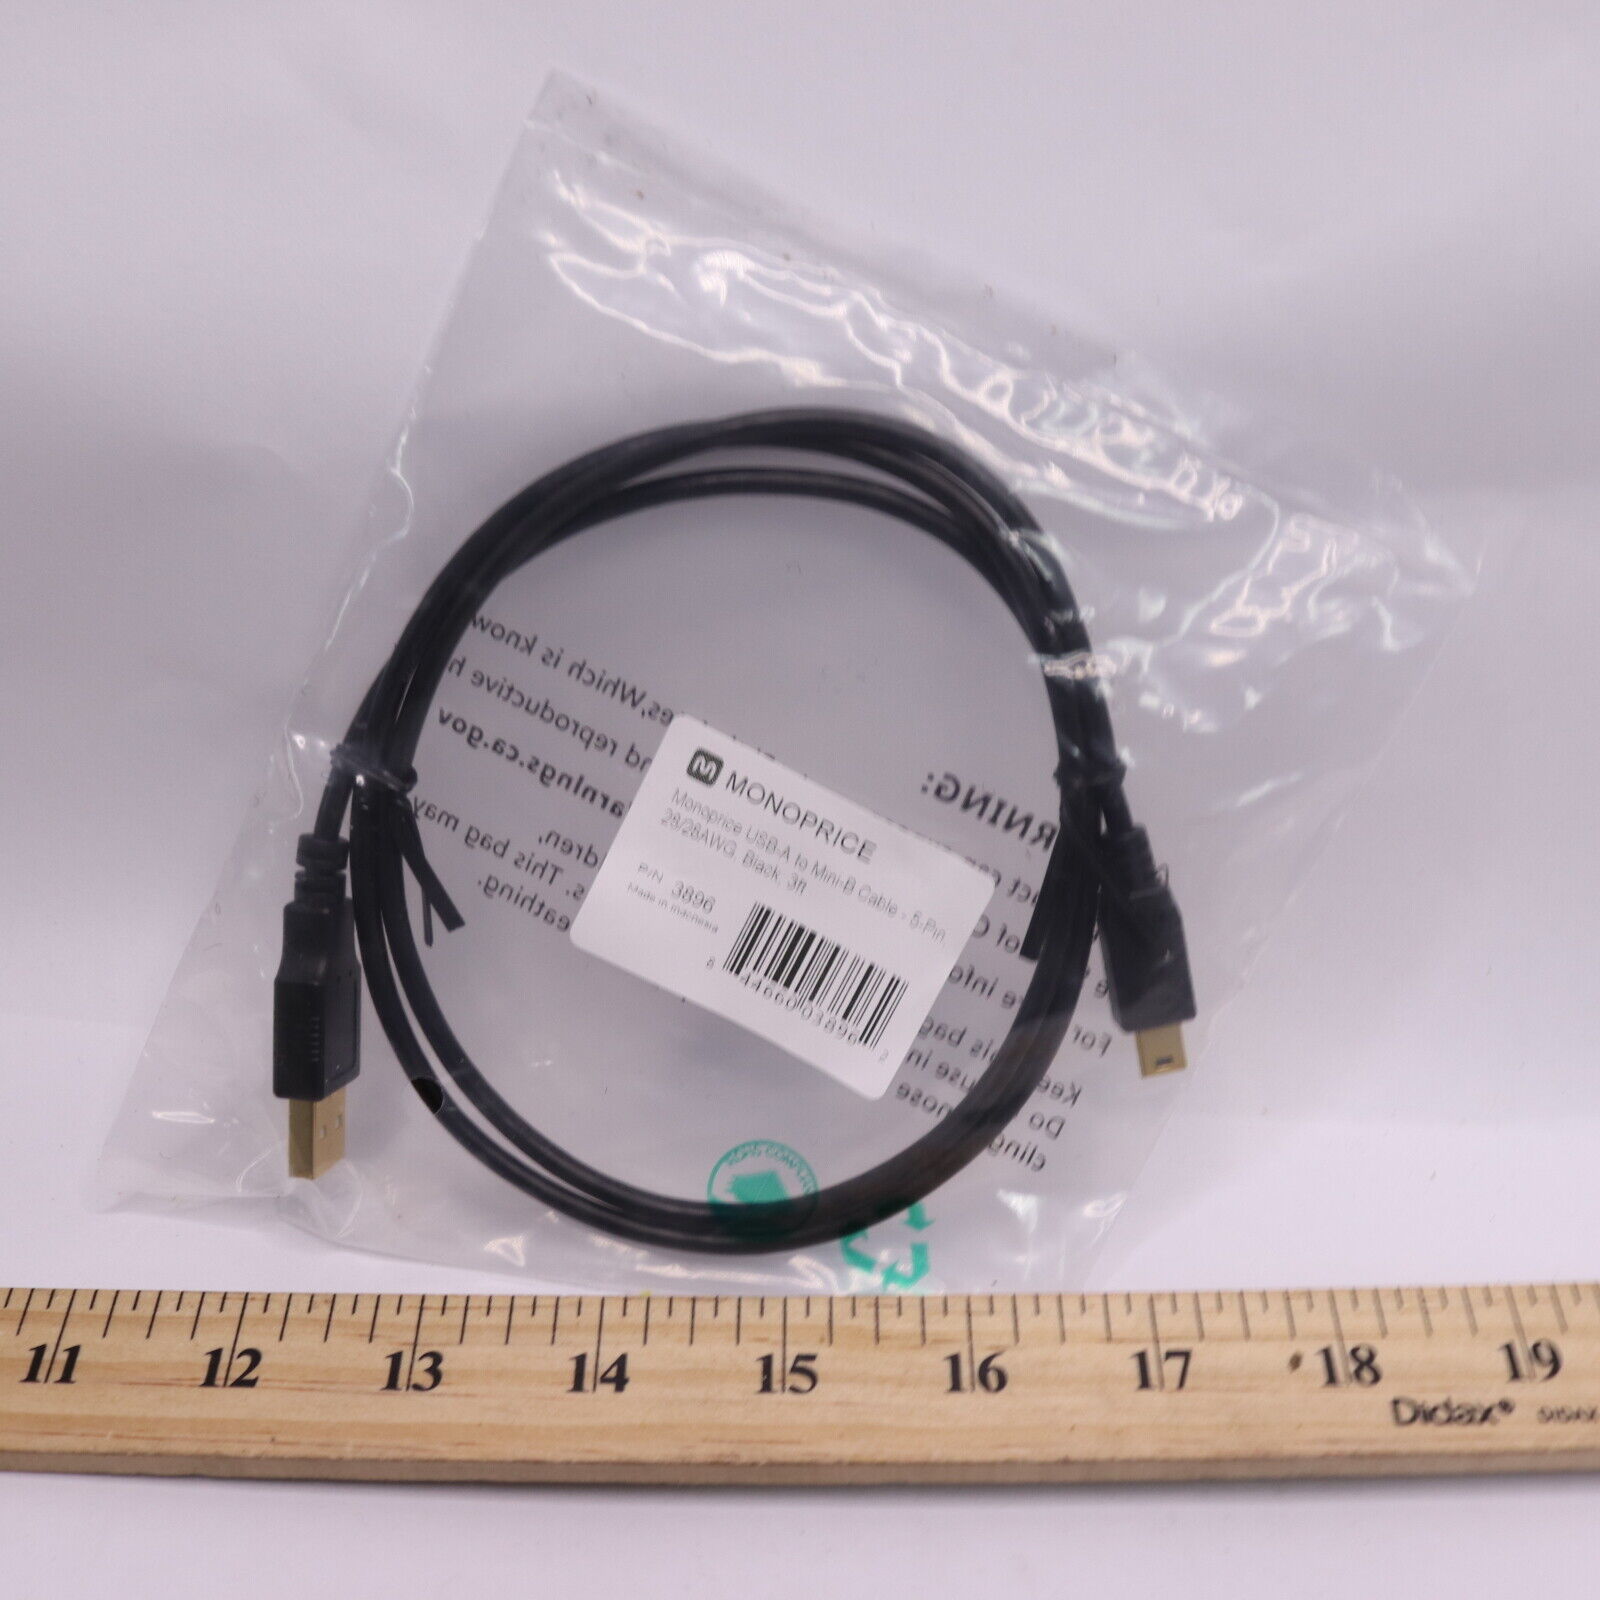 Monoprice USB A to Mini-B 5pin 28/28AWG Cable Black 3-Feet 3896 